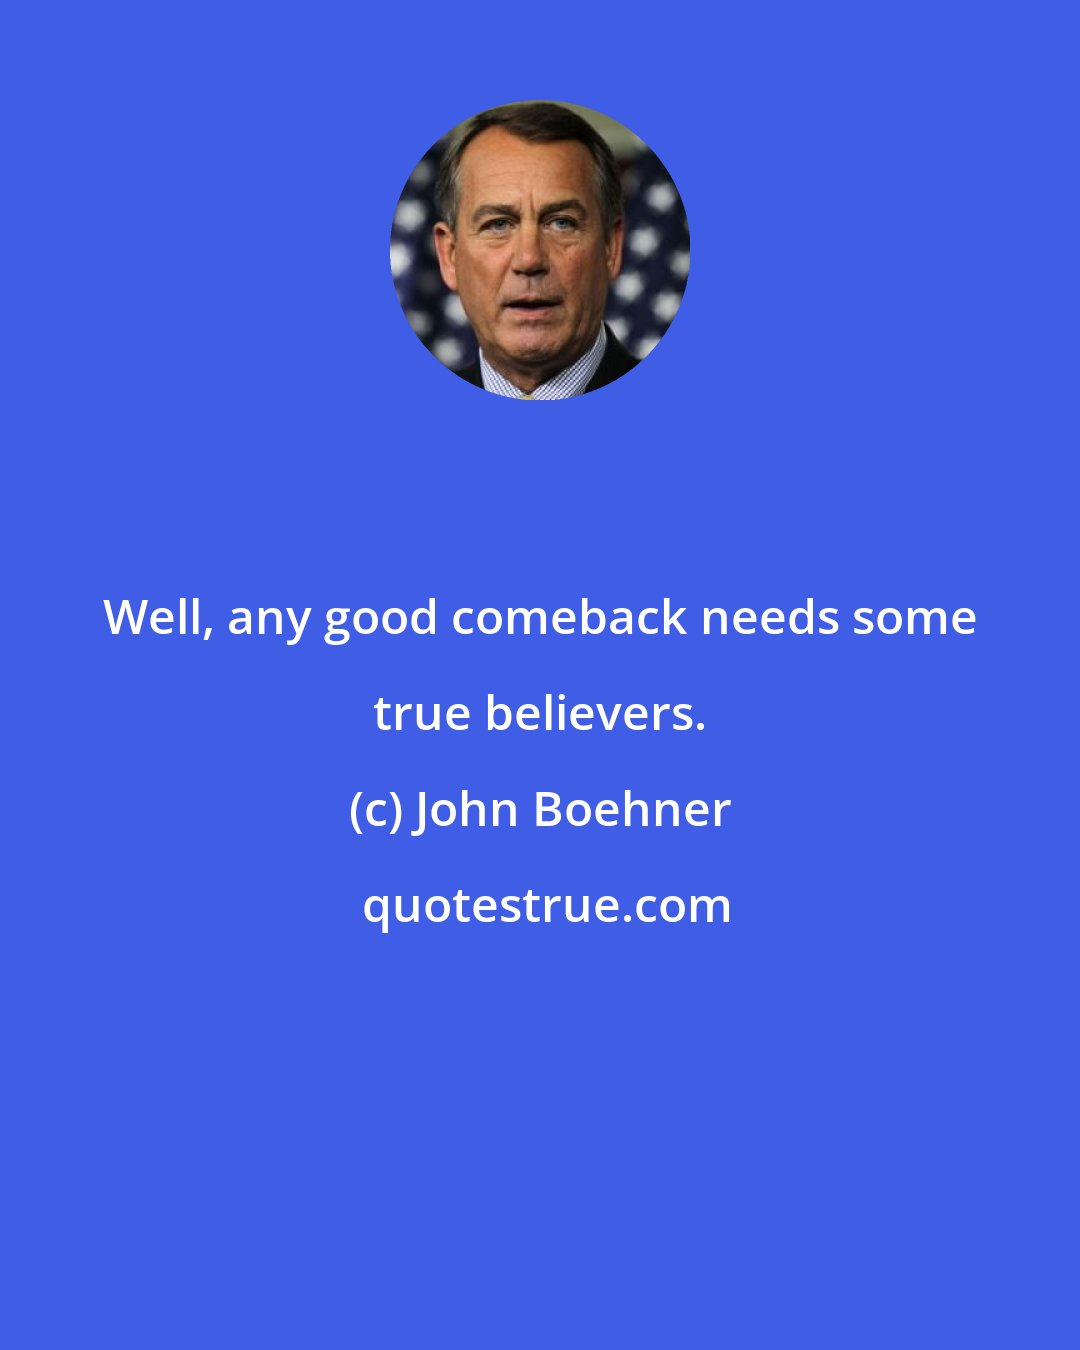 John Boehner: Well, any good comeback needs some true believers.